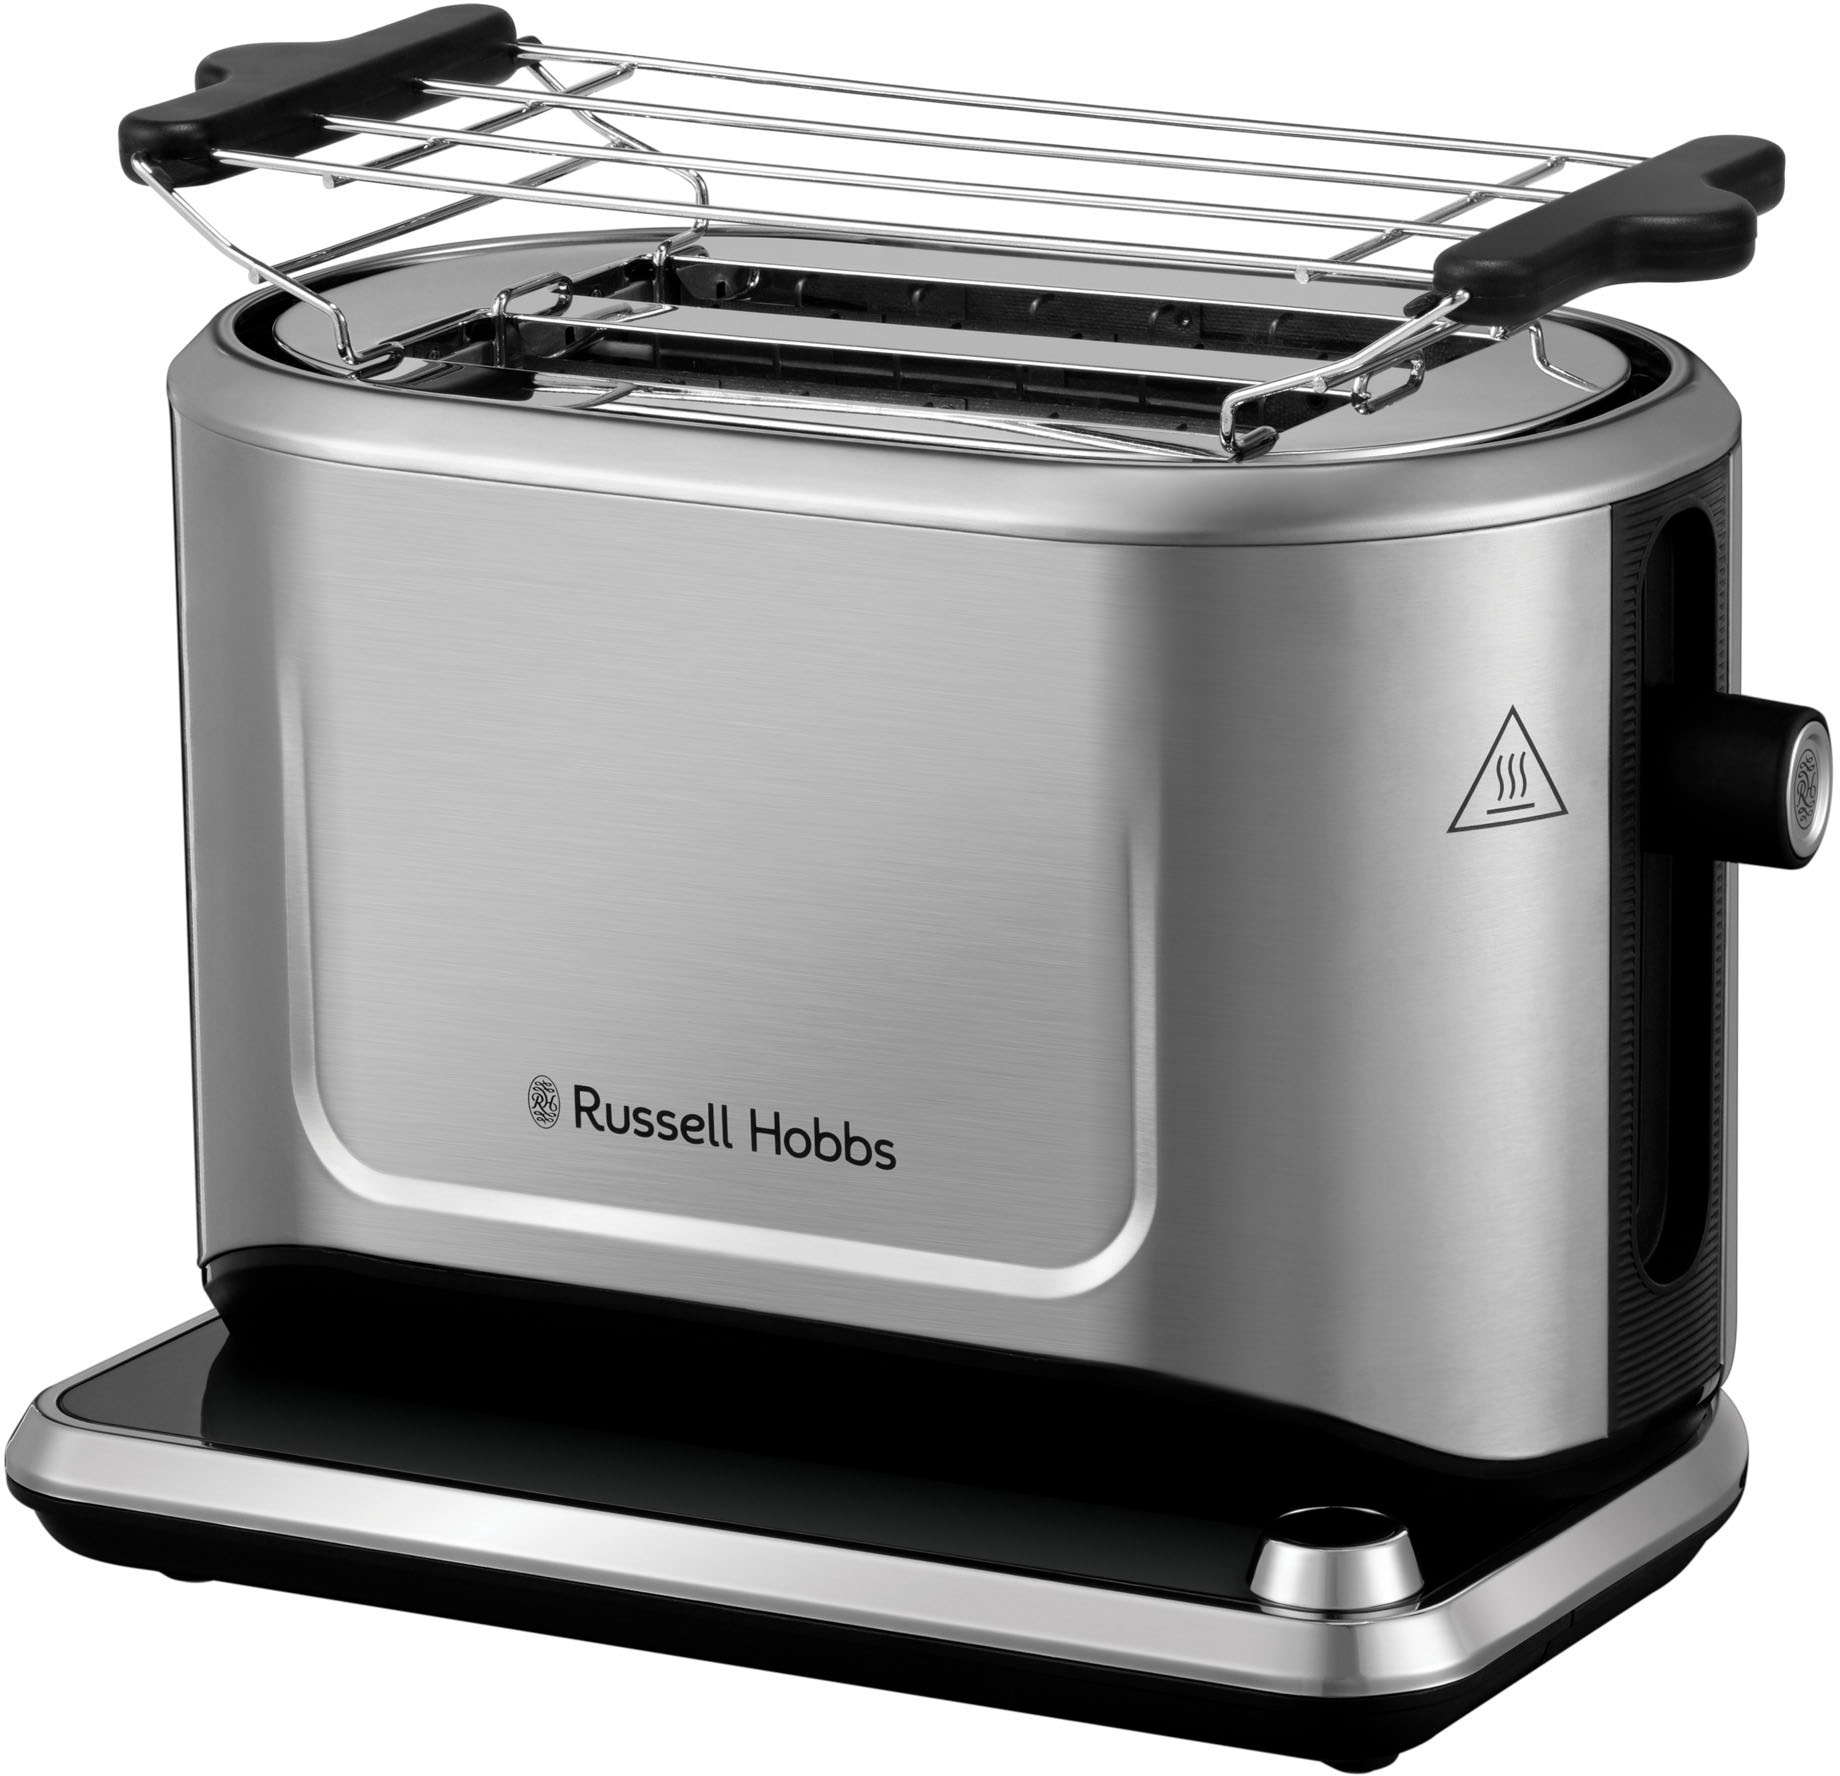 RUSSELL HOBBS Toaster »Attentiv 26210-56« 2 lange Sc...